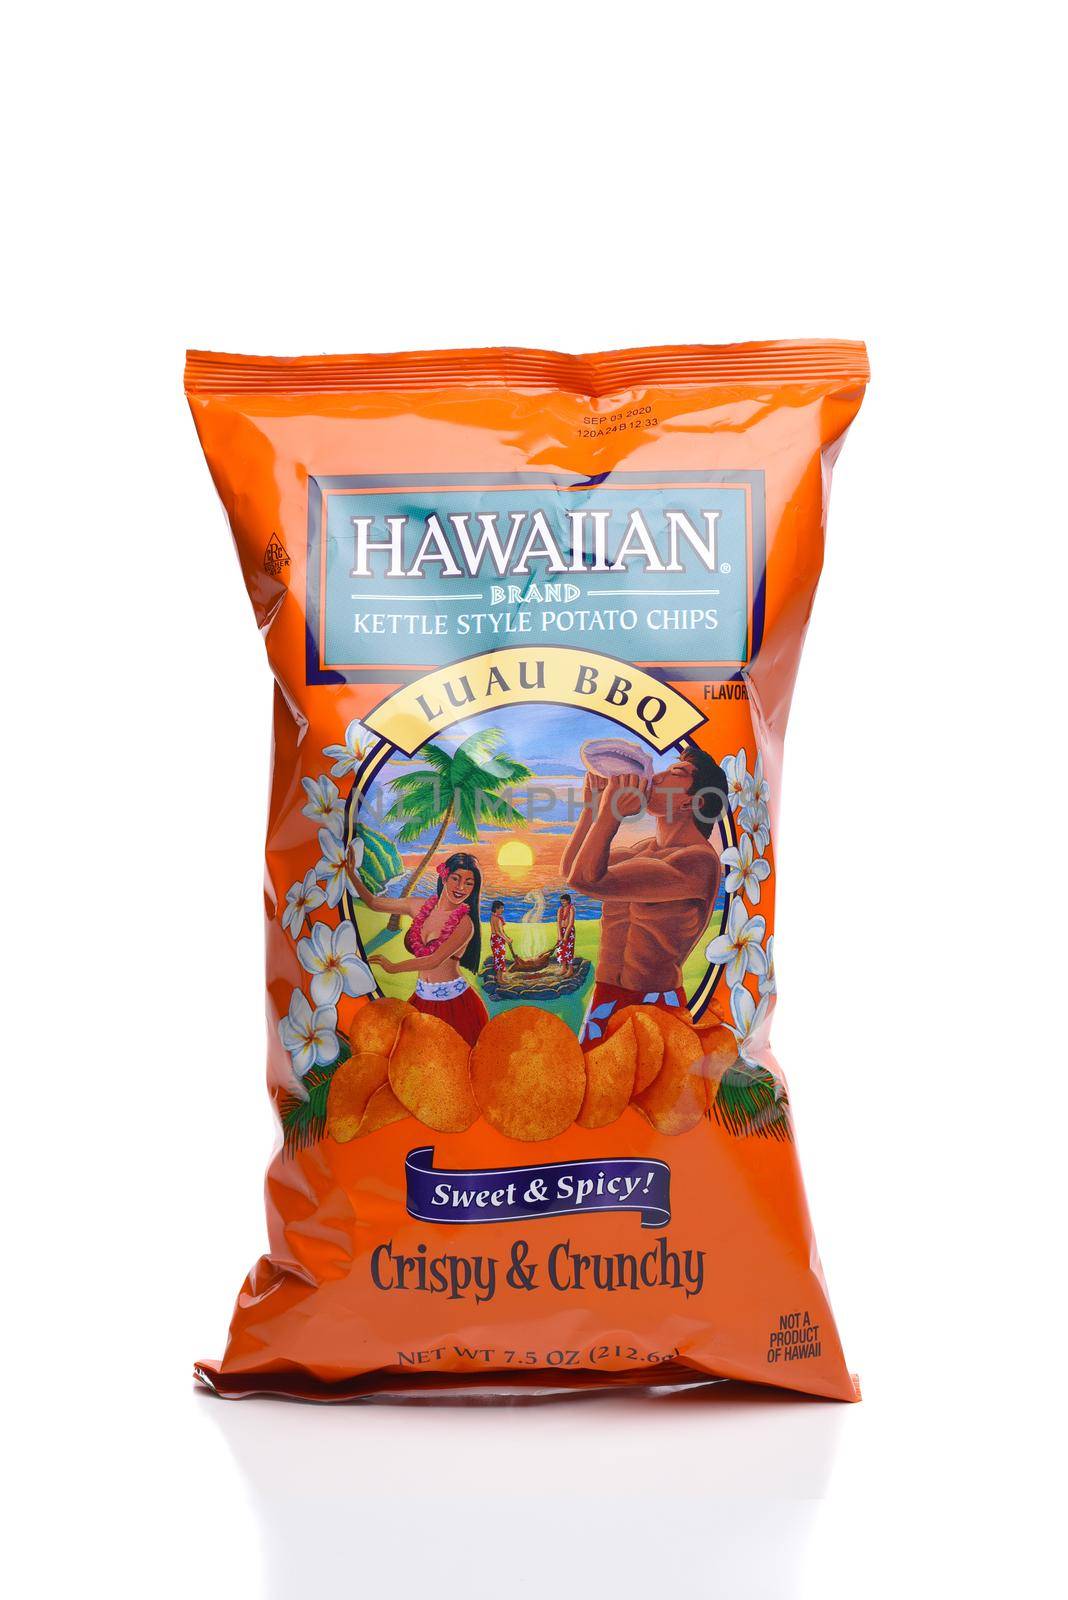 IRVINE, CALIFORNIA - 25 MAY 2020: A bag of Hawaiian Brand Kettle Style Luau BBQ Potato Chips